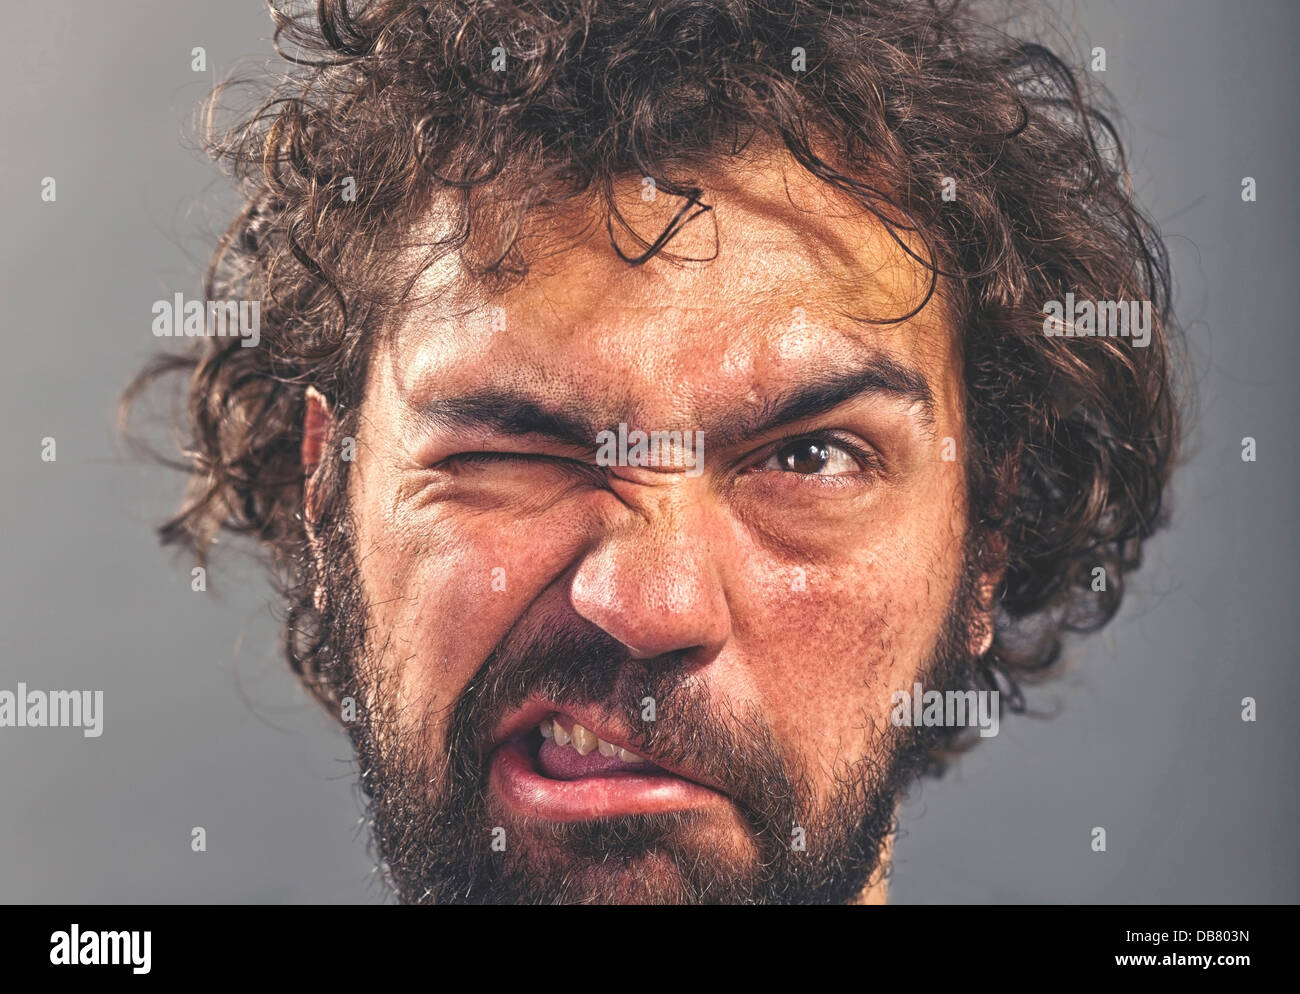 Weird guy making a crazy face Stock Photo